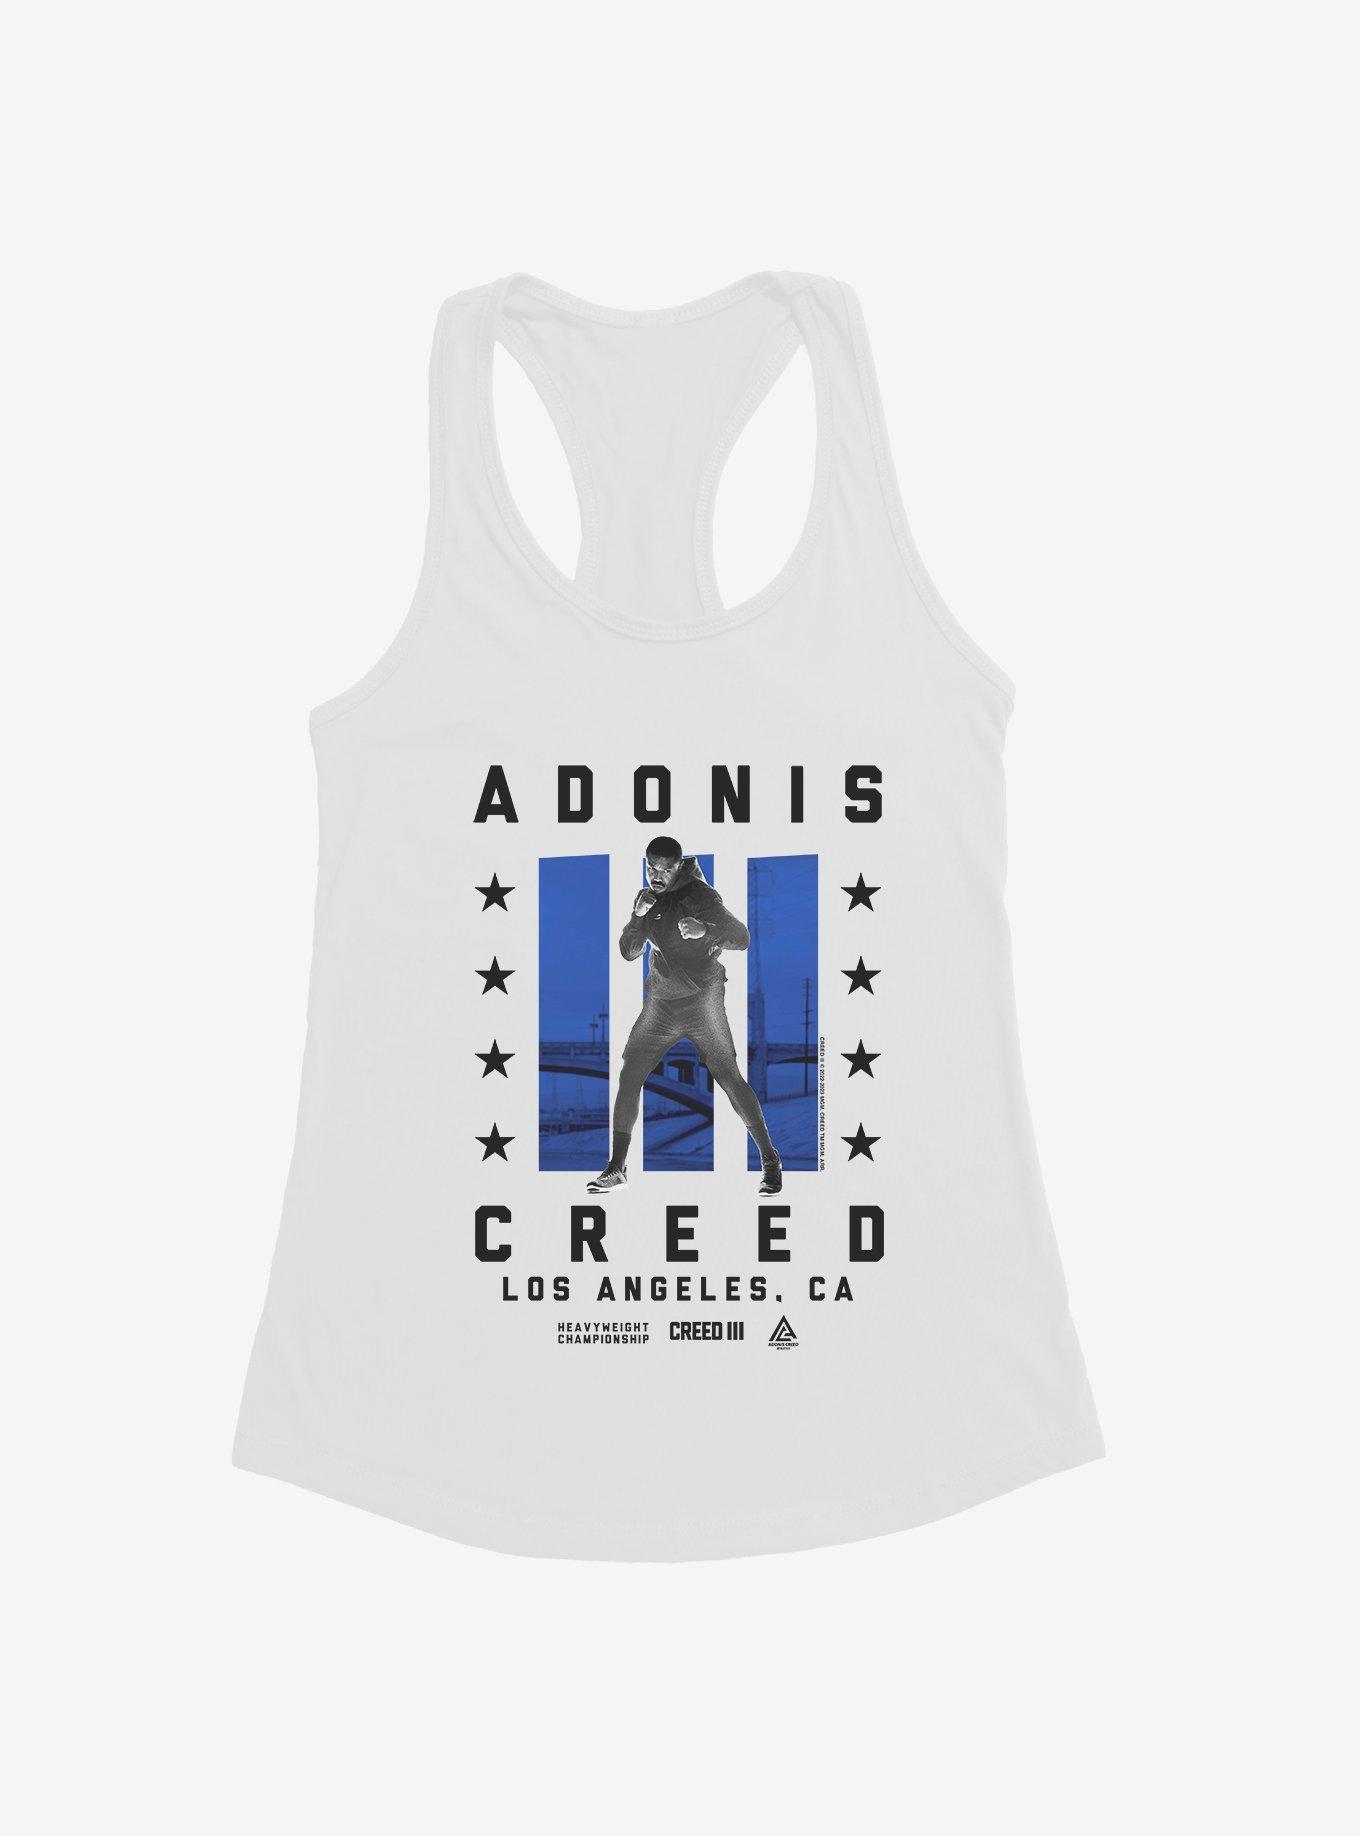 Creed III Adonis Creed LA Heavyweight Championship Girls Tank, WHITE, hi-res